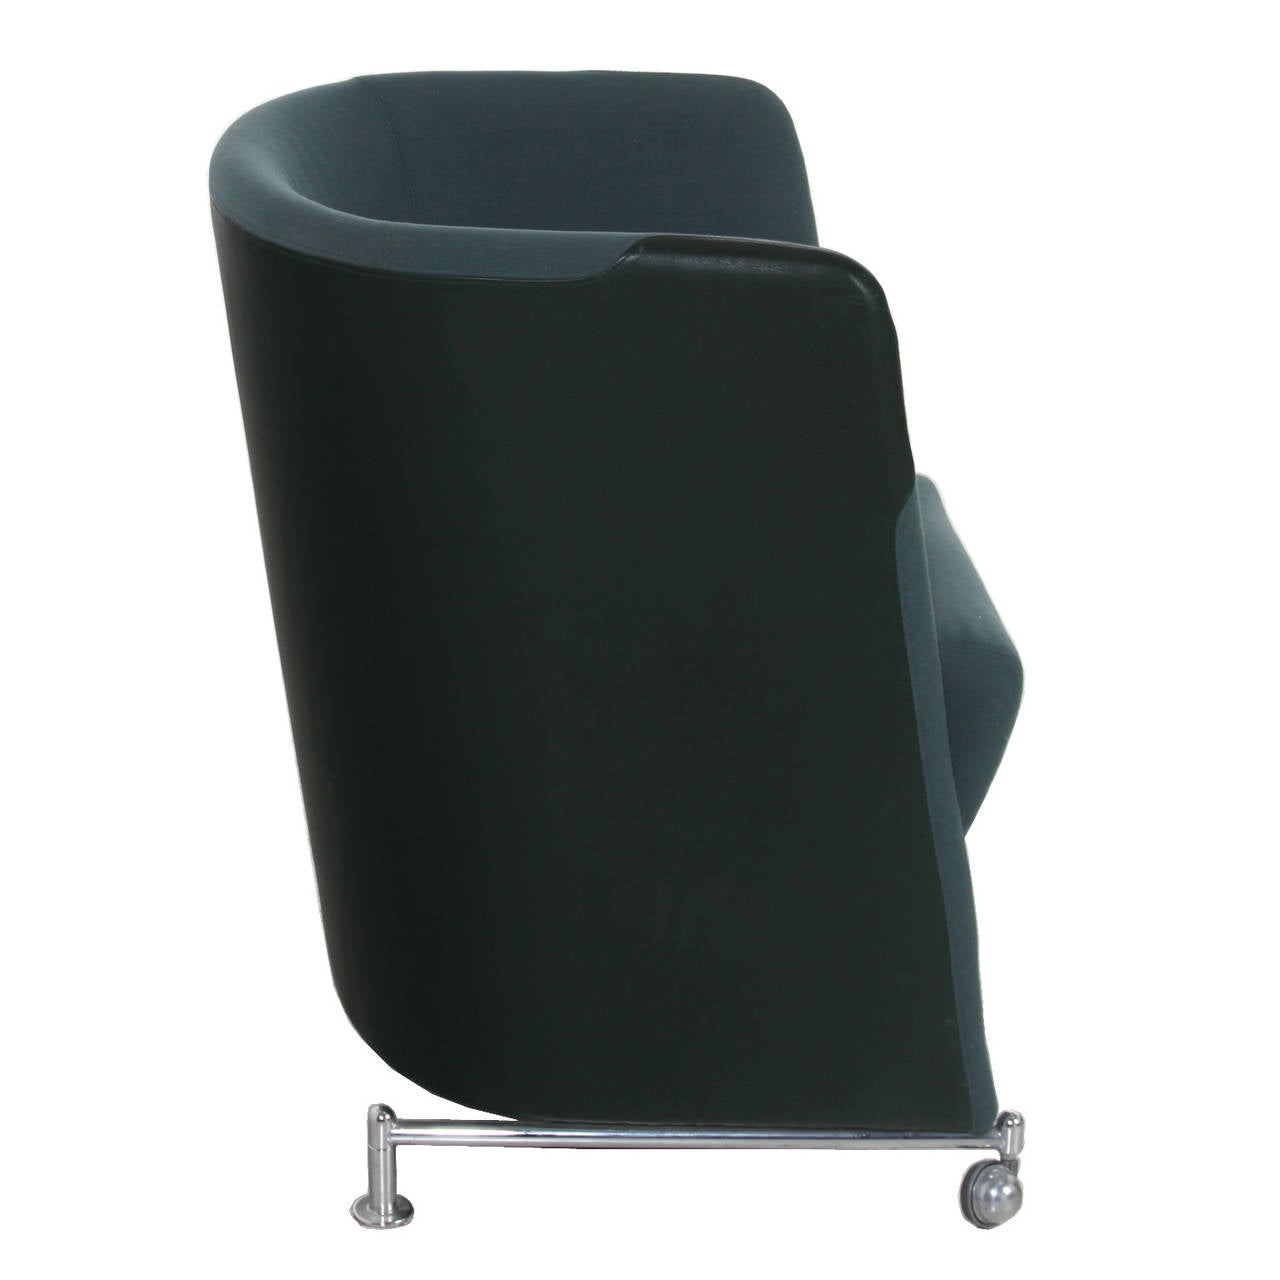 Green leather and wool chairs Lindau & Lindekrantz, Lammhults 1